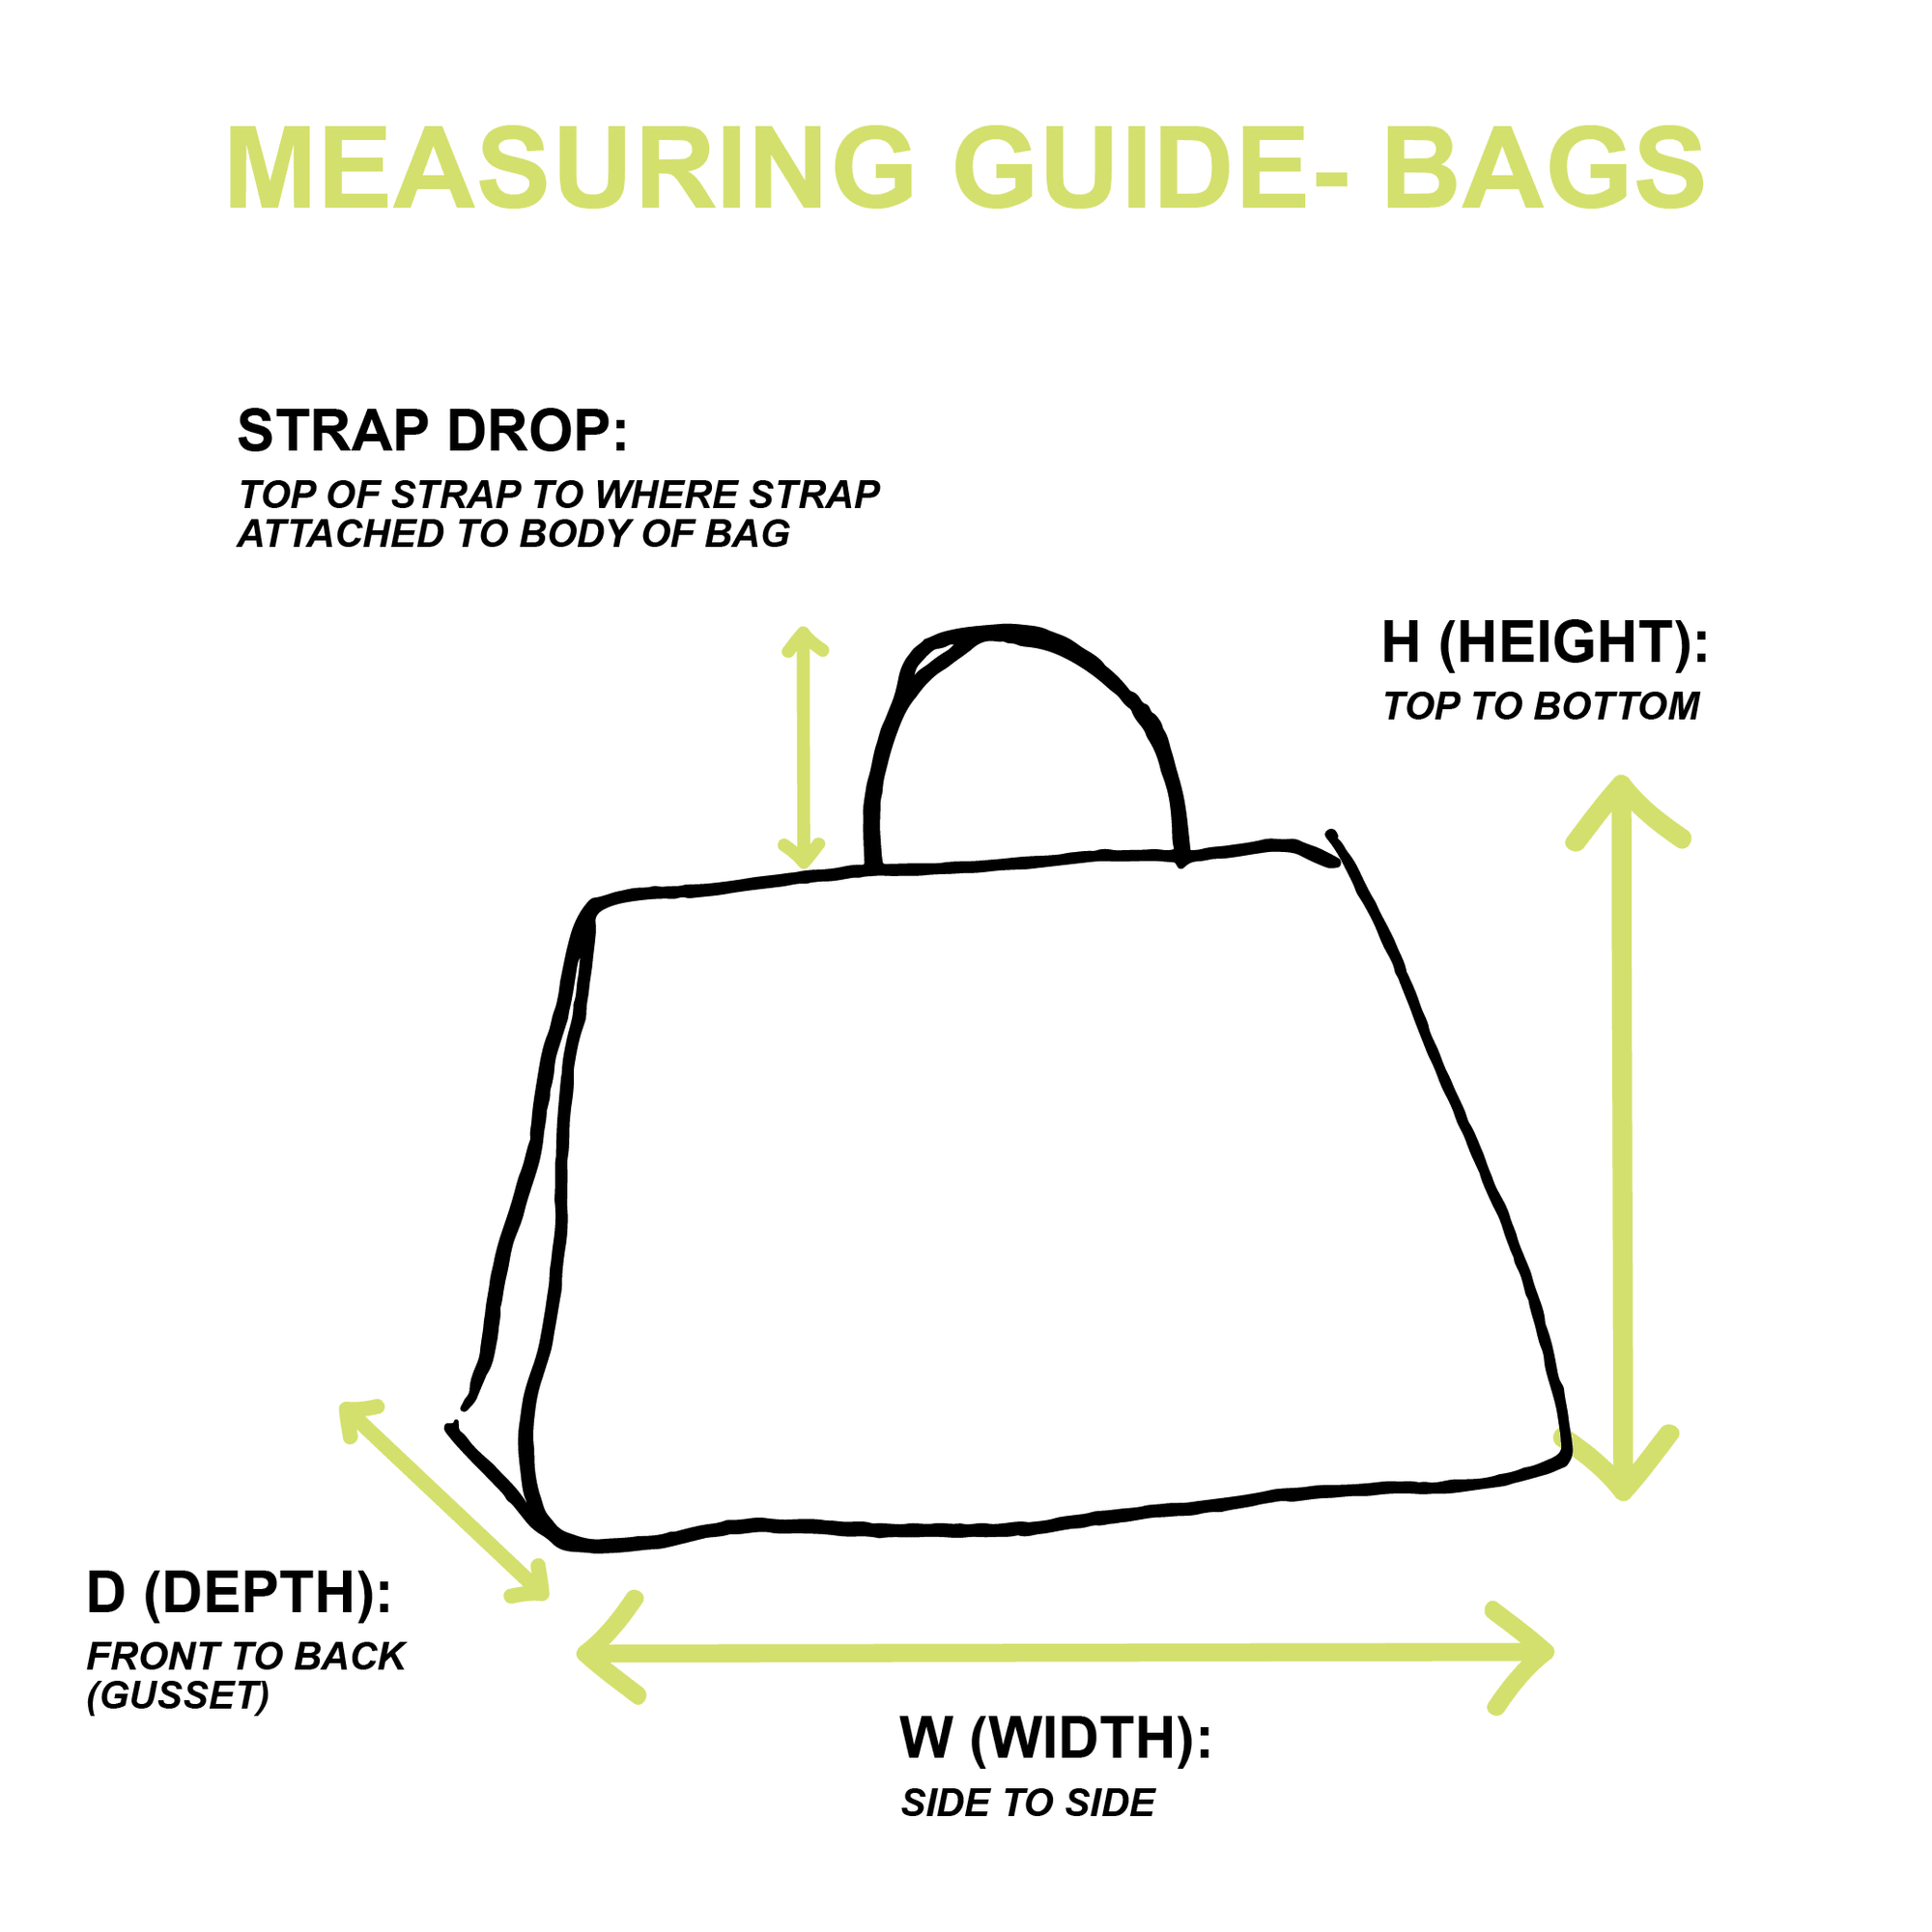 Louis Vuitton Fuchsia Monogram Shoulder Bag - Handbags